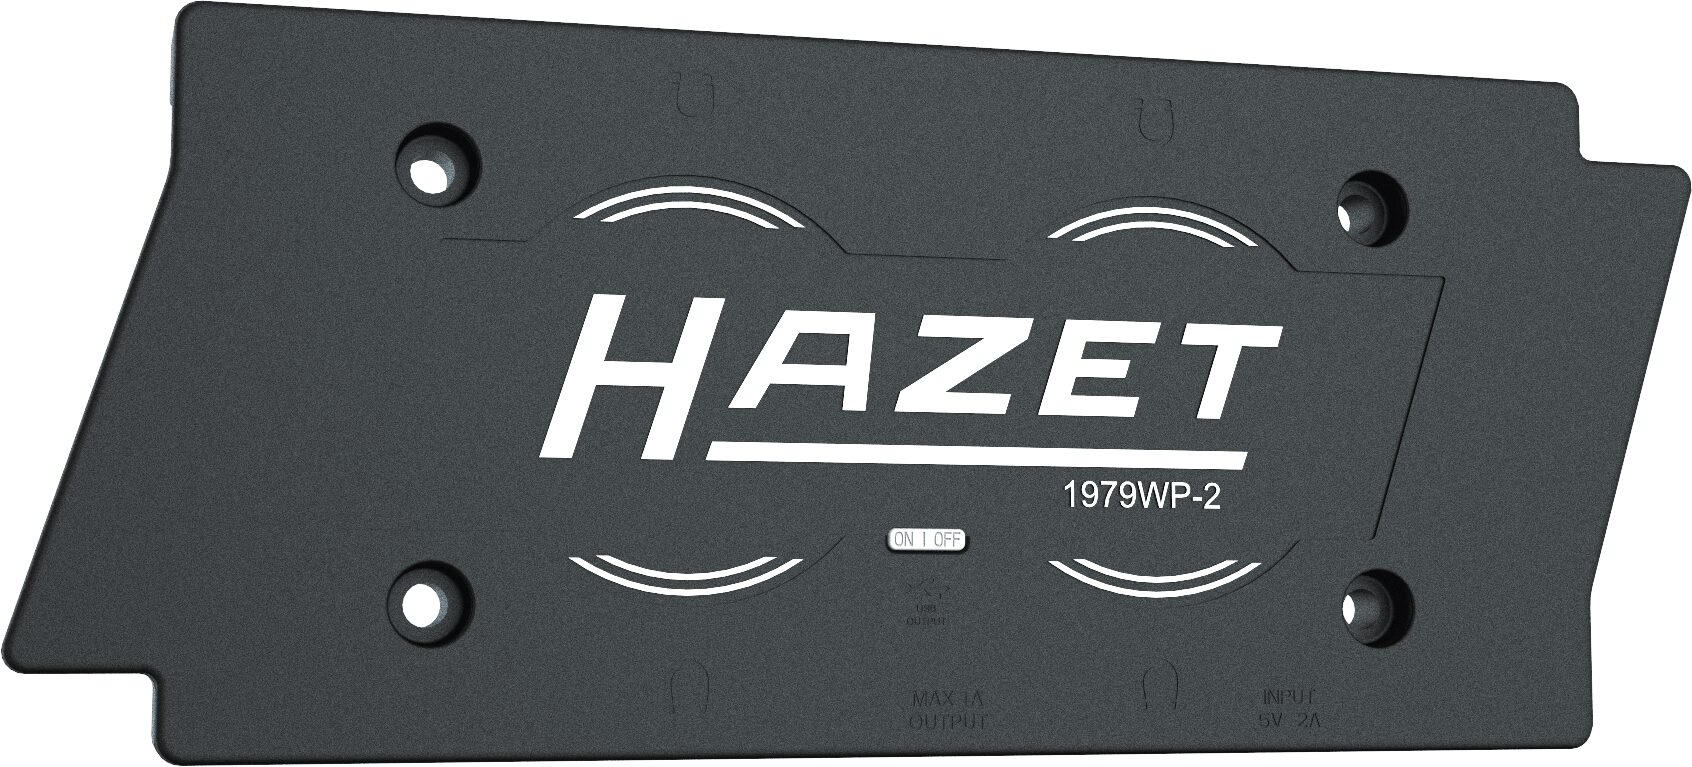 HAZET Dual wireless charging pad 1979WP-2